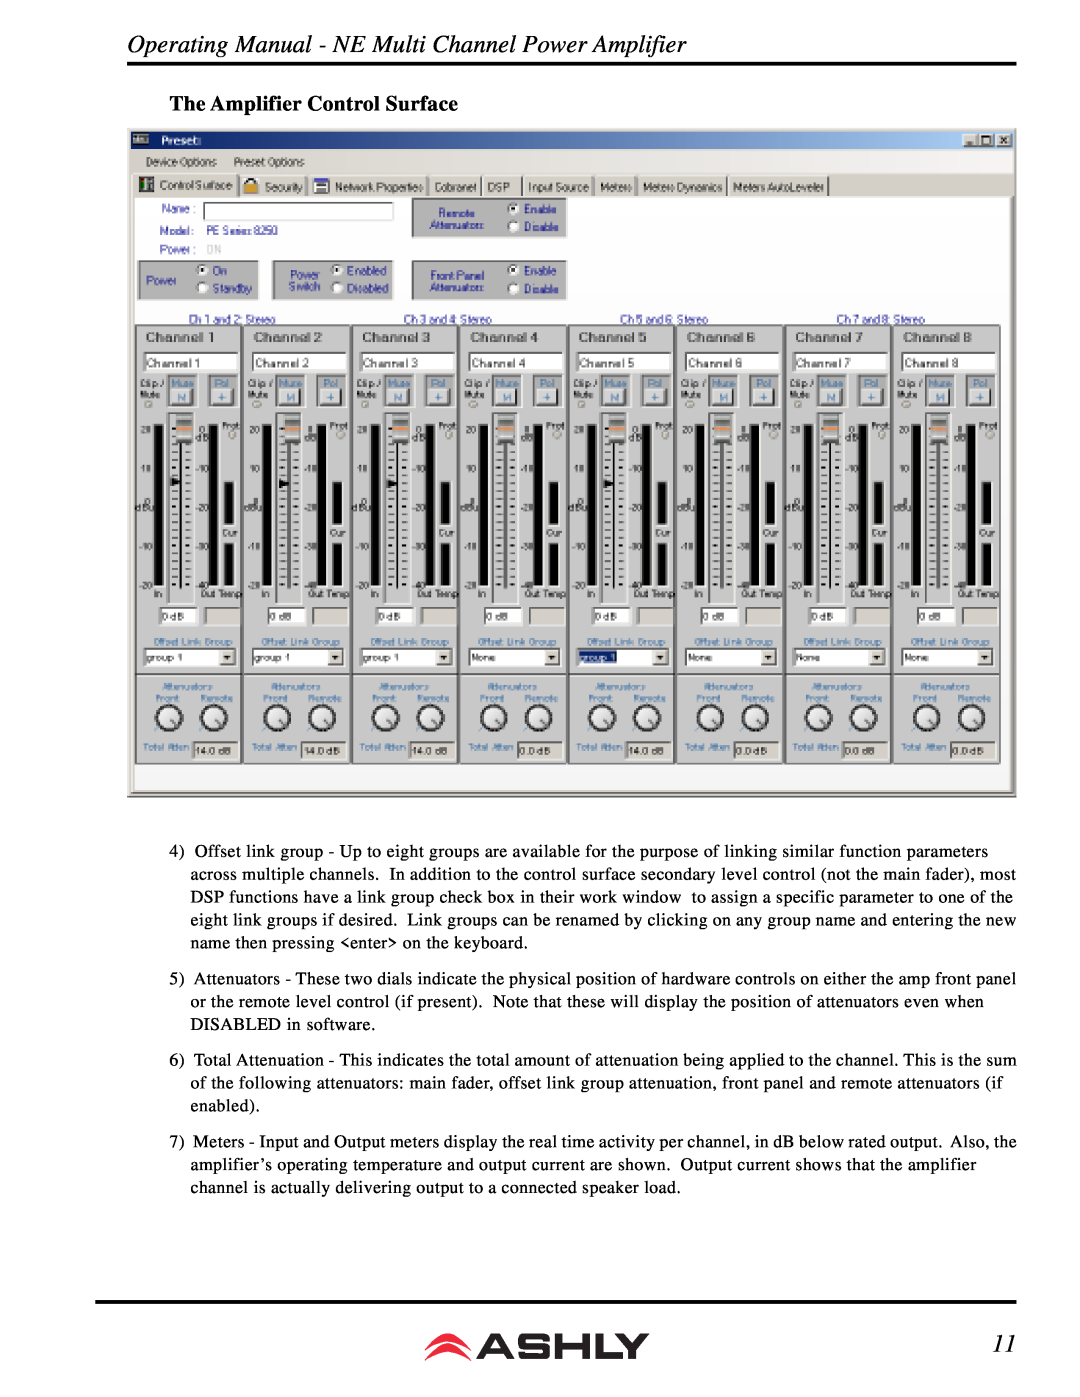 Ashly NE 4200.25 manual The Amplifier Control Surface 